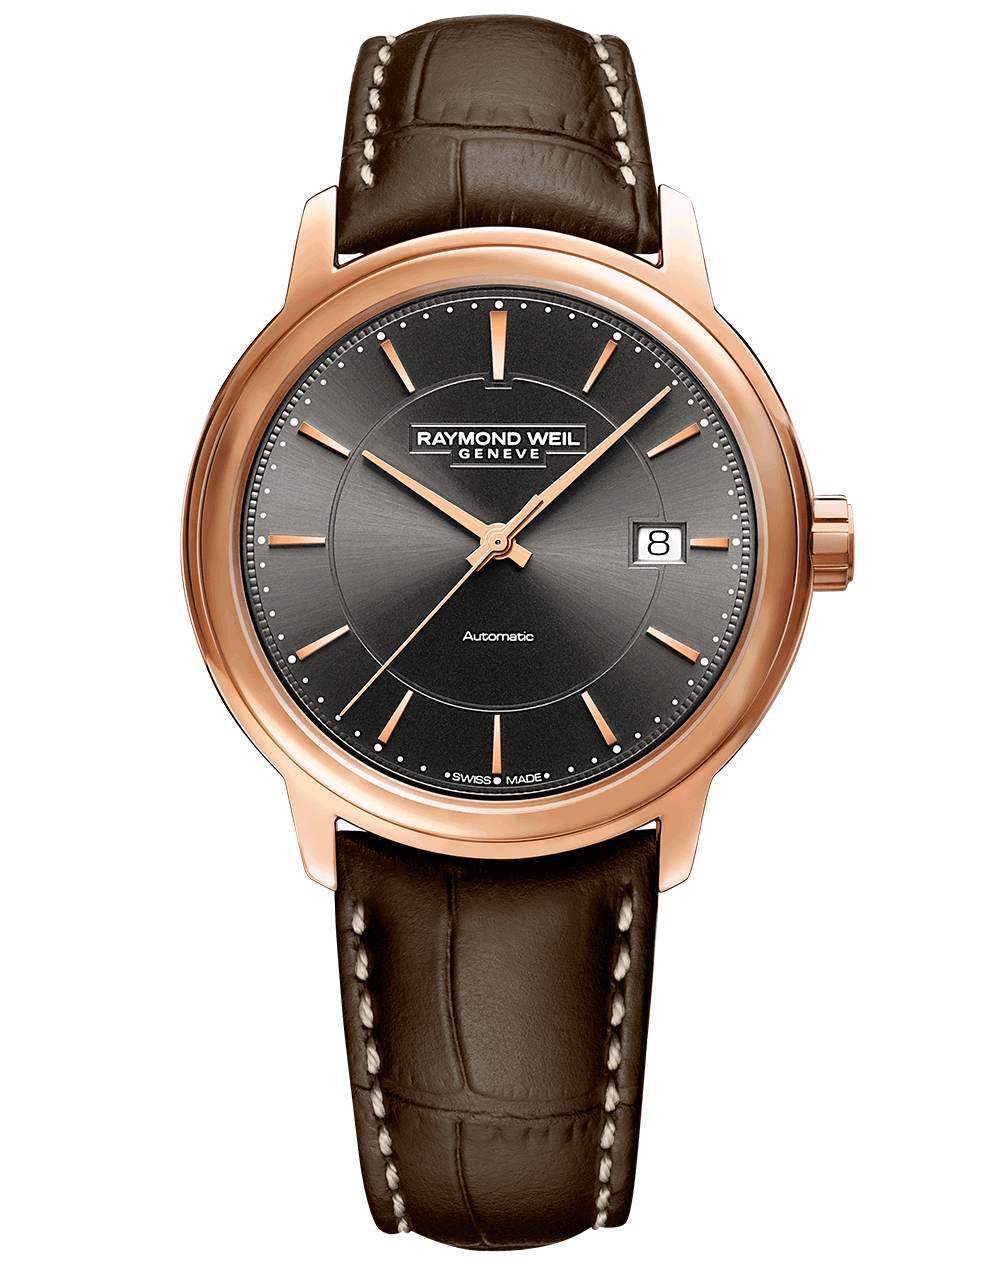 Breitling Bentley Motors T Chronograph Purple Dial Replica Watch